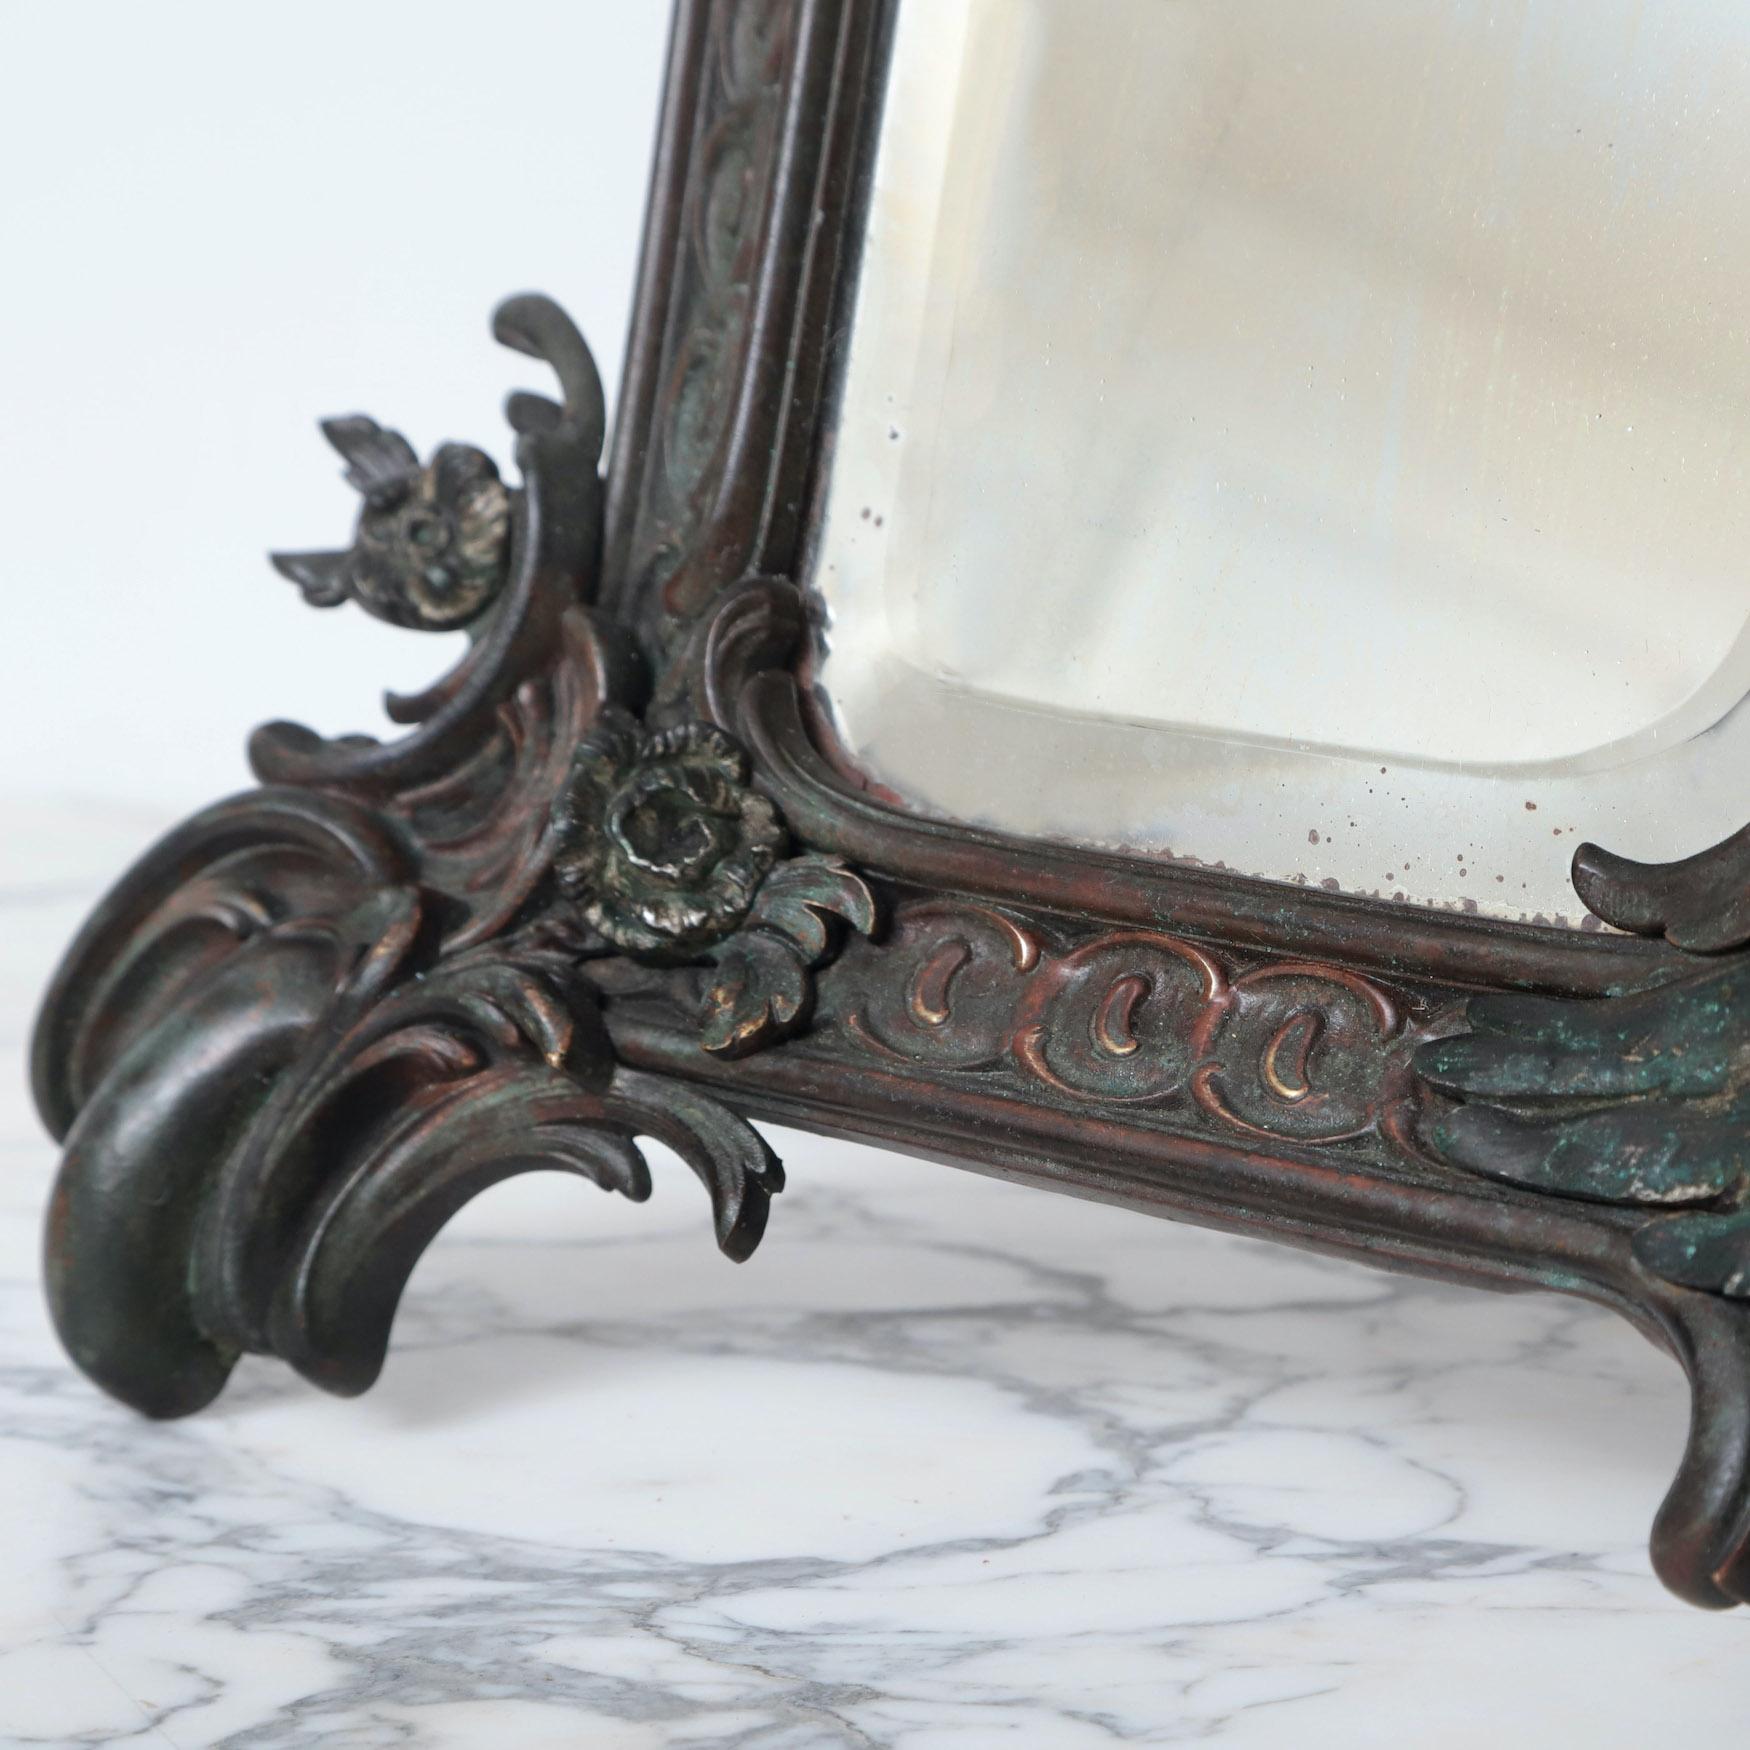 A 19th century bronze mirror.

France, probably Paris, circa 1860

Measures : Height: 84cm Width: 47cm Depth: (extended) 54cm

” An unusual 19th century bronze table mirror in the shape of harp ”

.